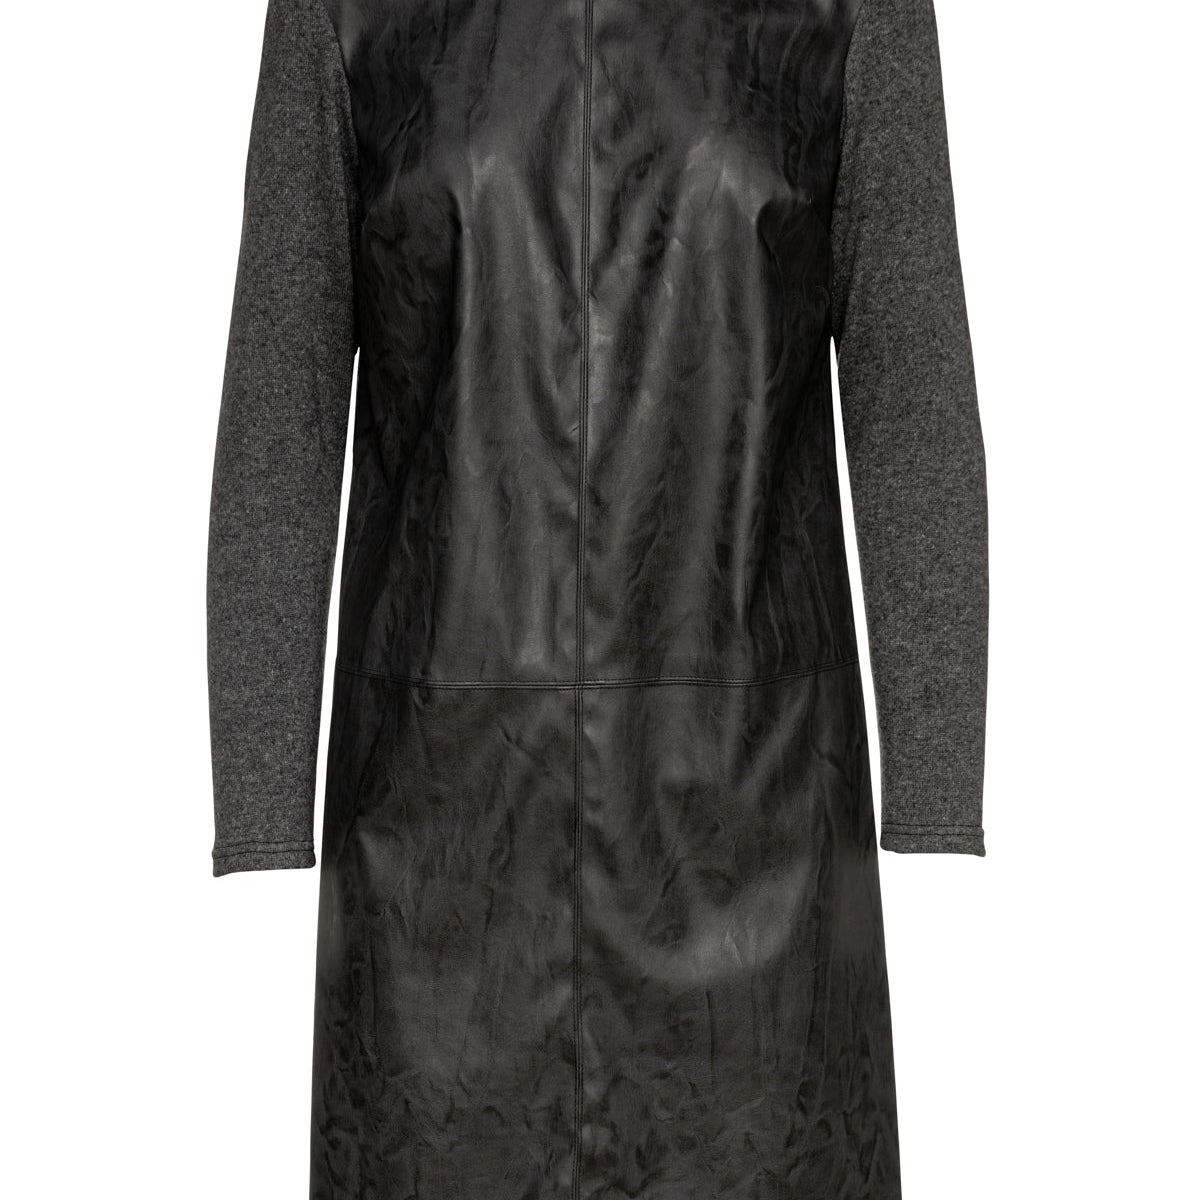 Conquista Women's Woven Faux Leather Dress